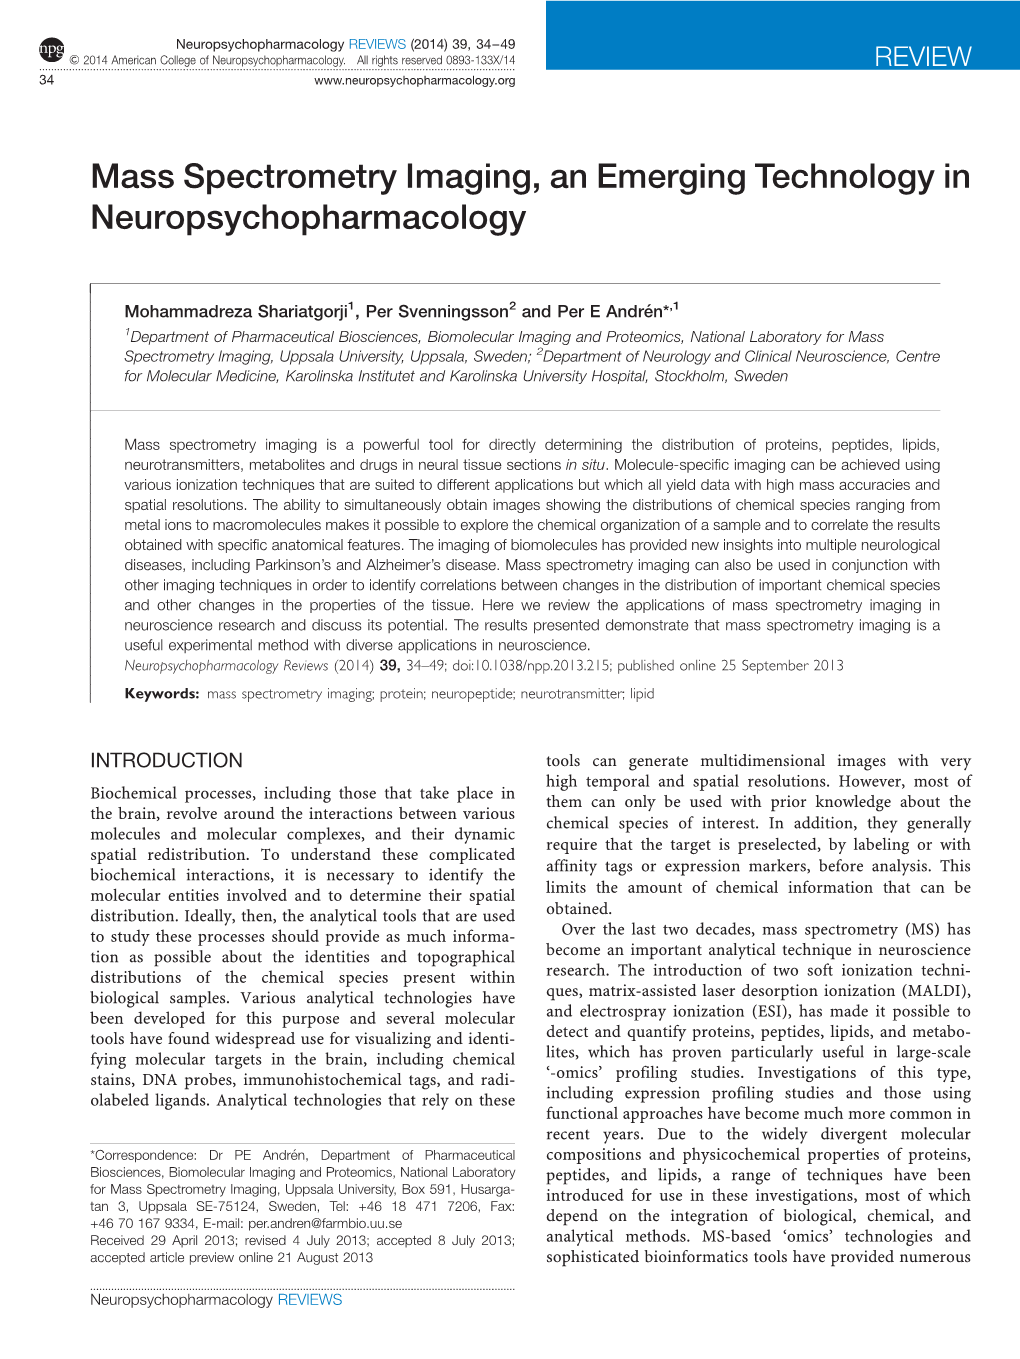 Mass Spectrometry Imaging, an Emerging Technology in Neuropsychopharmacology